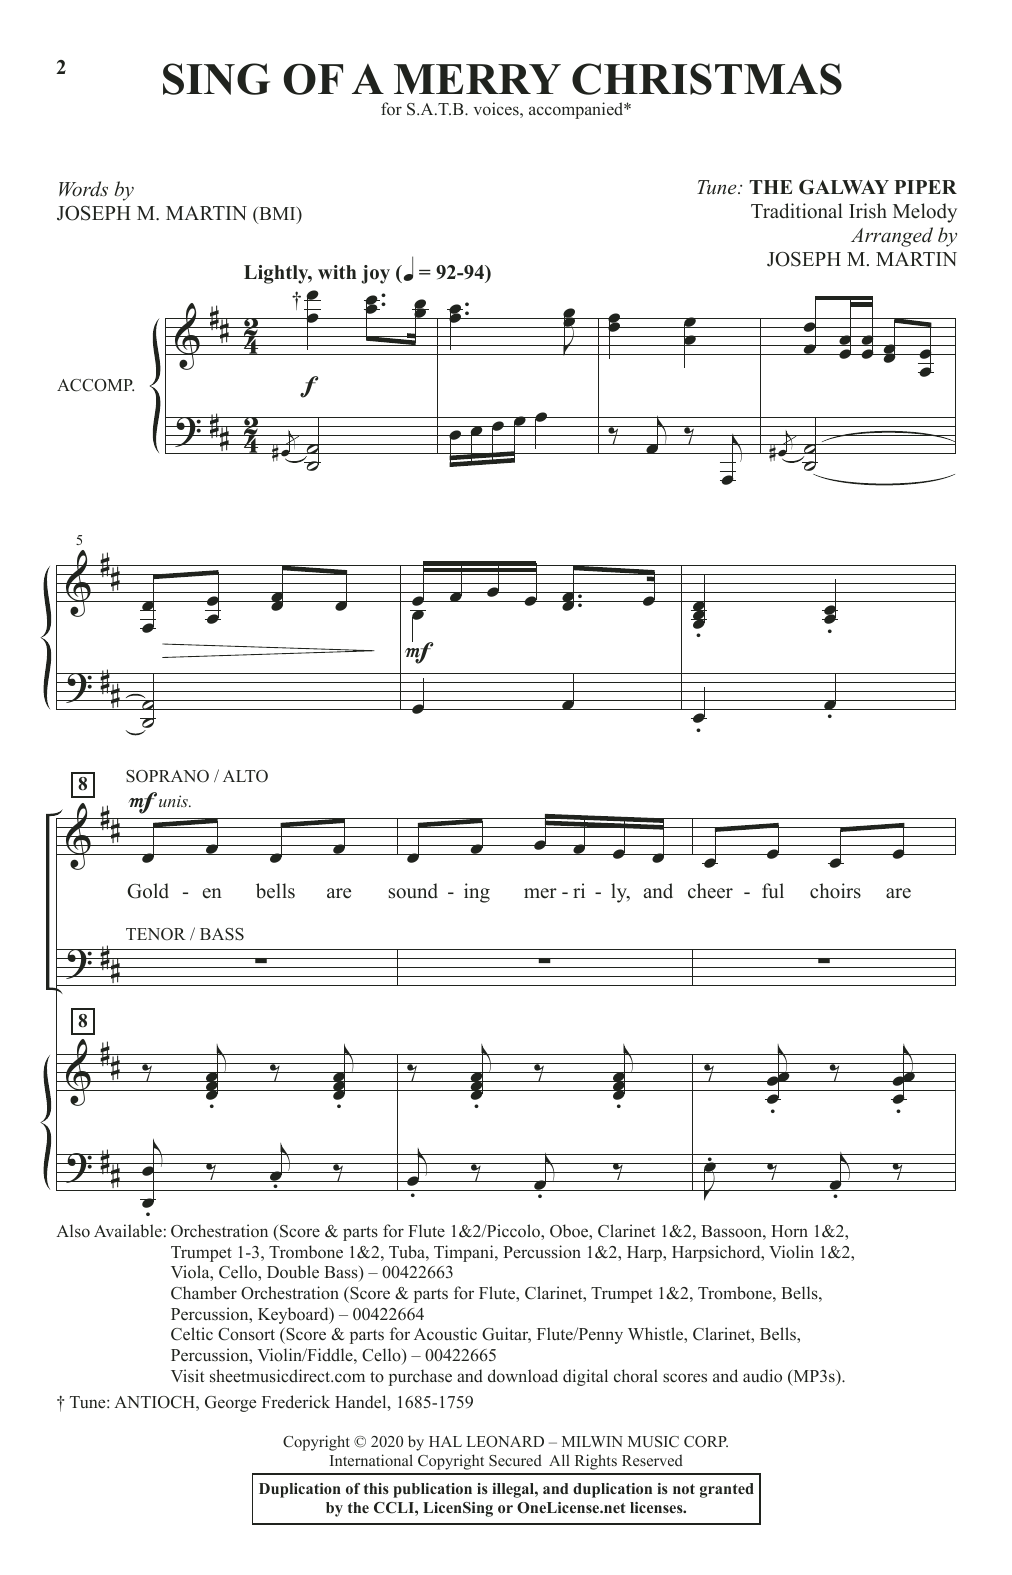 Download Joseph M. Martin Sing Of A Merry Christmas Sheet Music